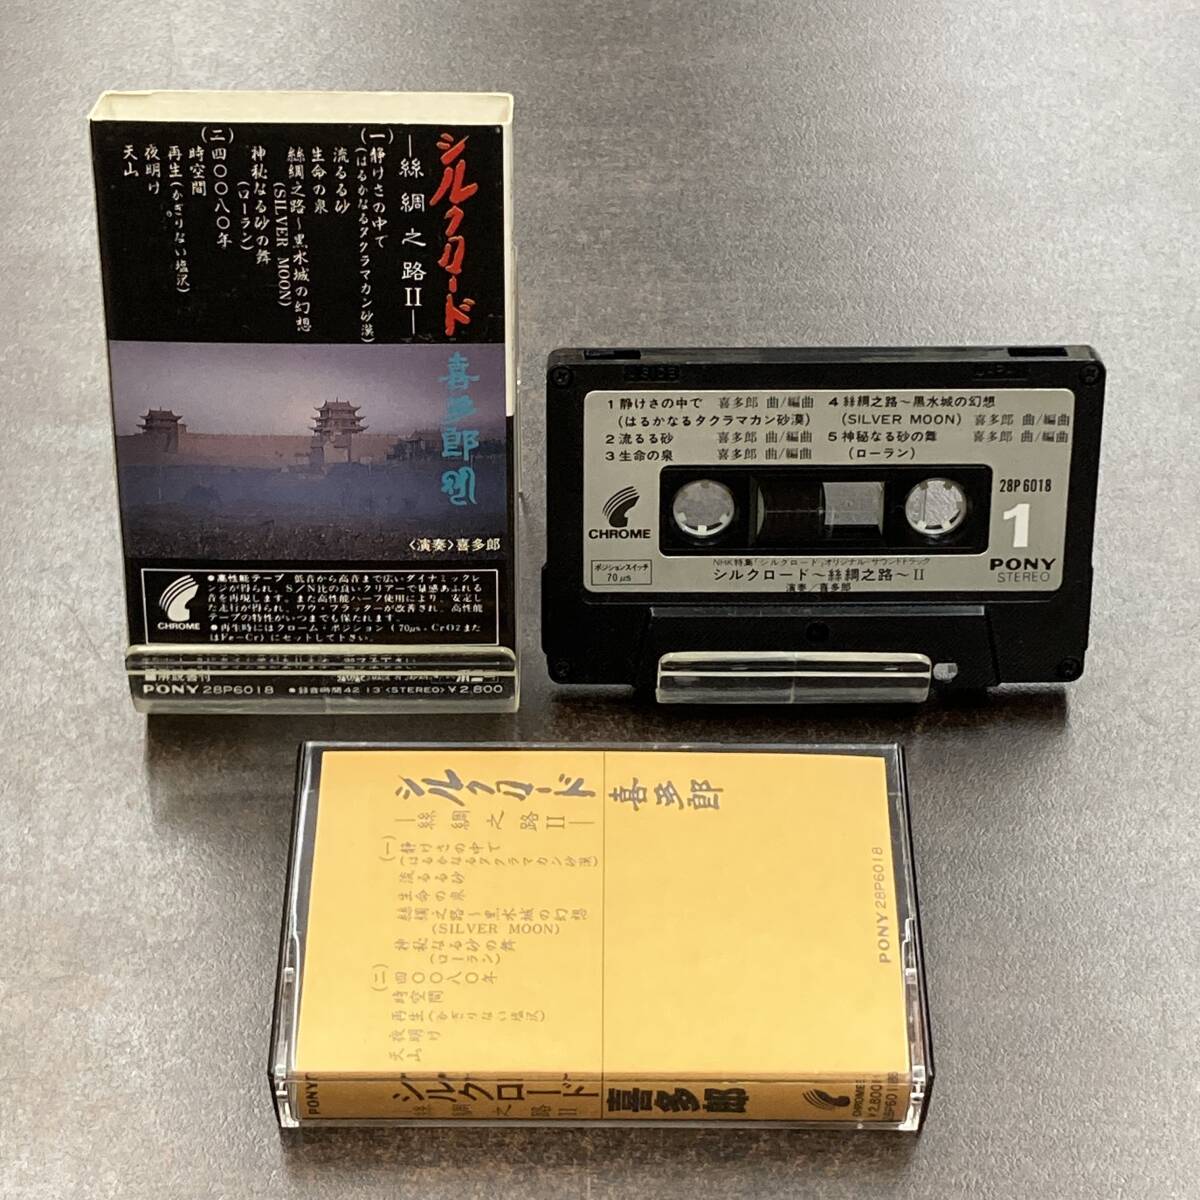 1065M 喜多郎 シルクロード  絲綢之路 カセットテープ / KITARO Soundtrack Cassette Tapeの画像2